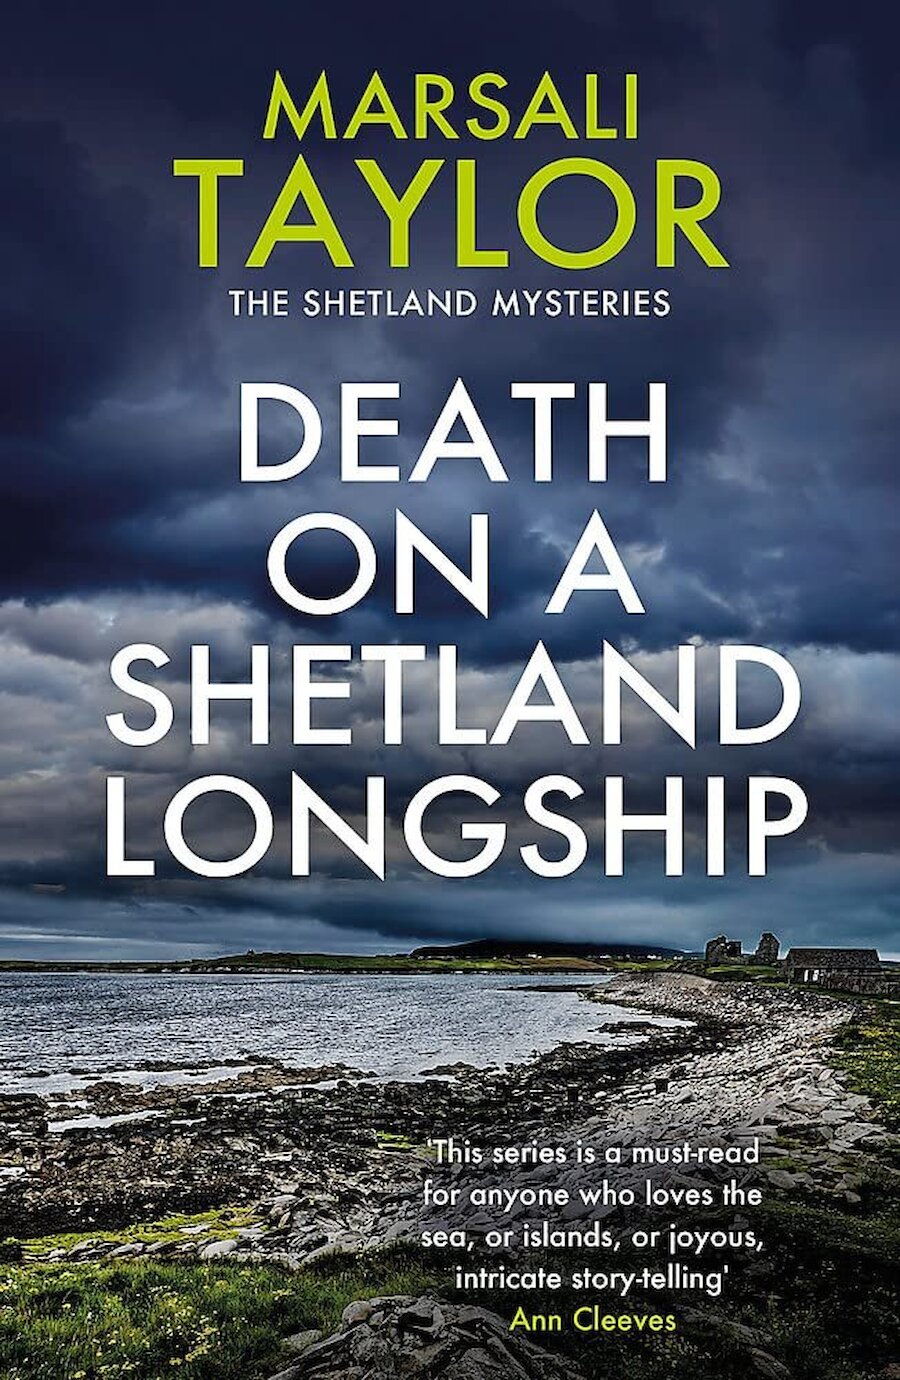 Death on a Shetland Longship by Marsali Taylor